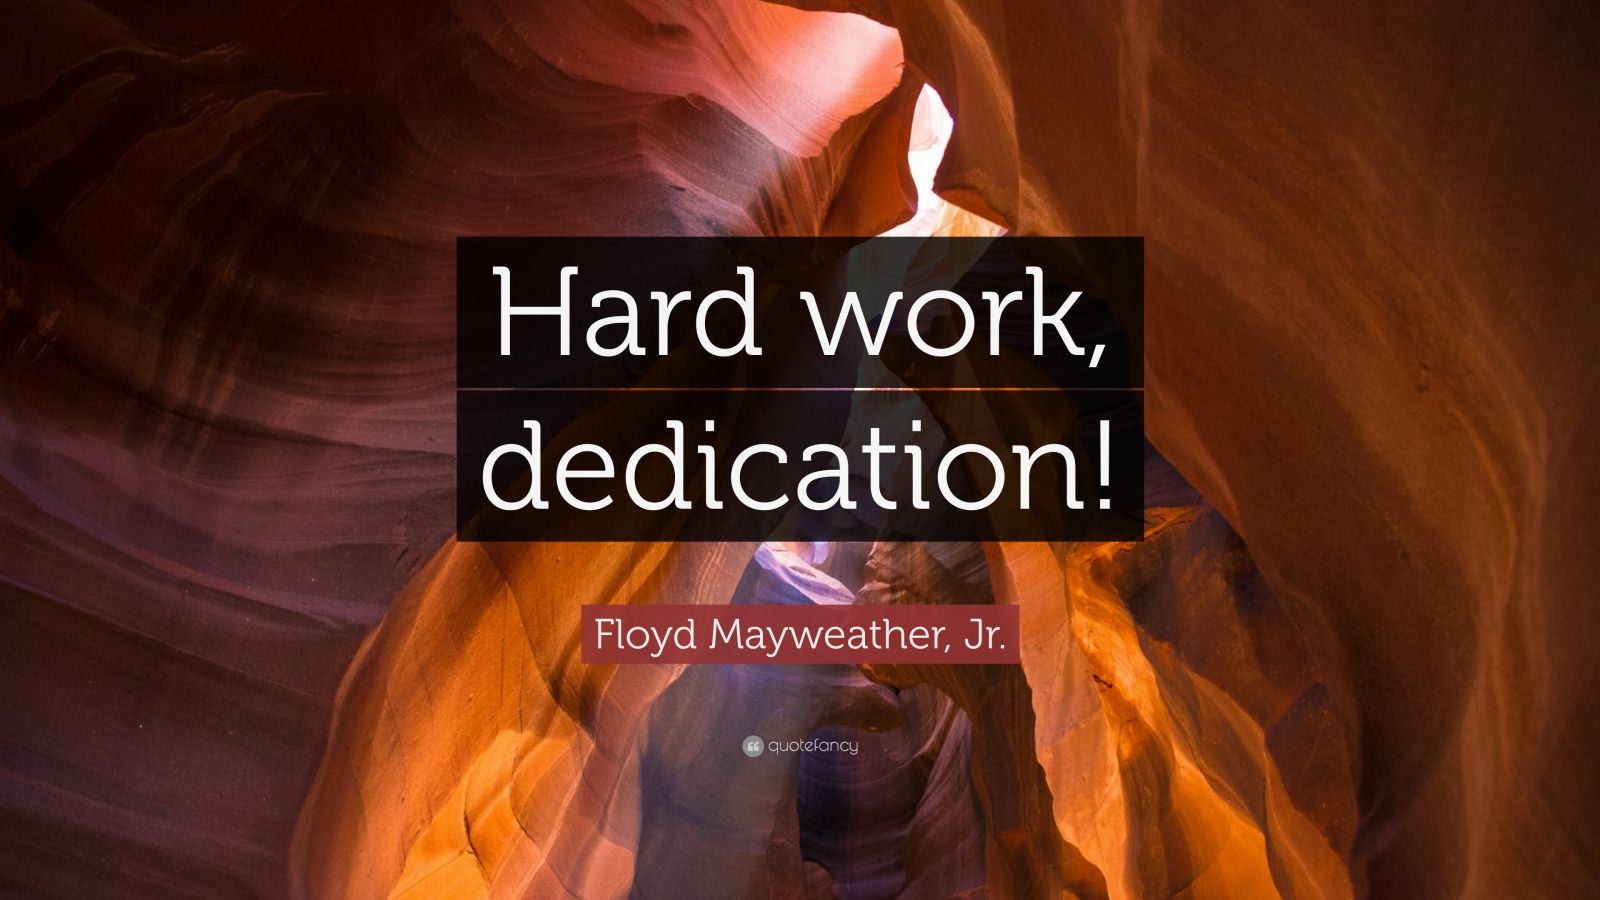 Floyd Mayweather, Jr. Quote: “Hard work, dedication!” (12 wallpapers